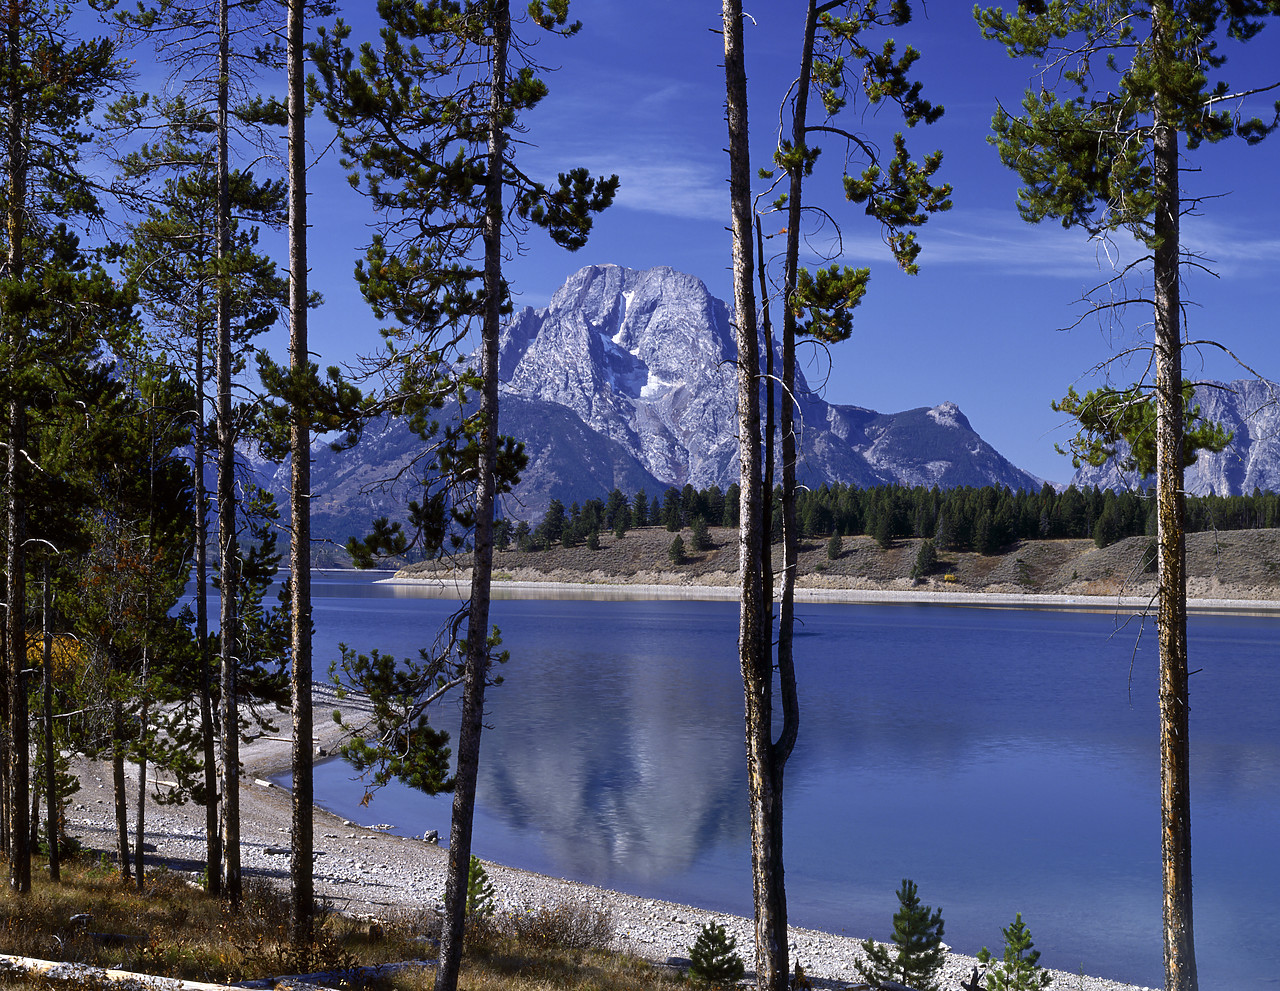 #913731-1 - Mt. Moran Reflecting in Jackson Lake, Grand Teton National park, Wyoming, USA